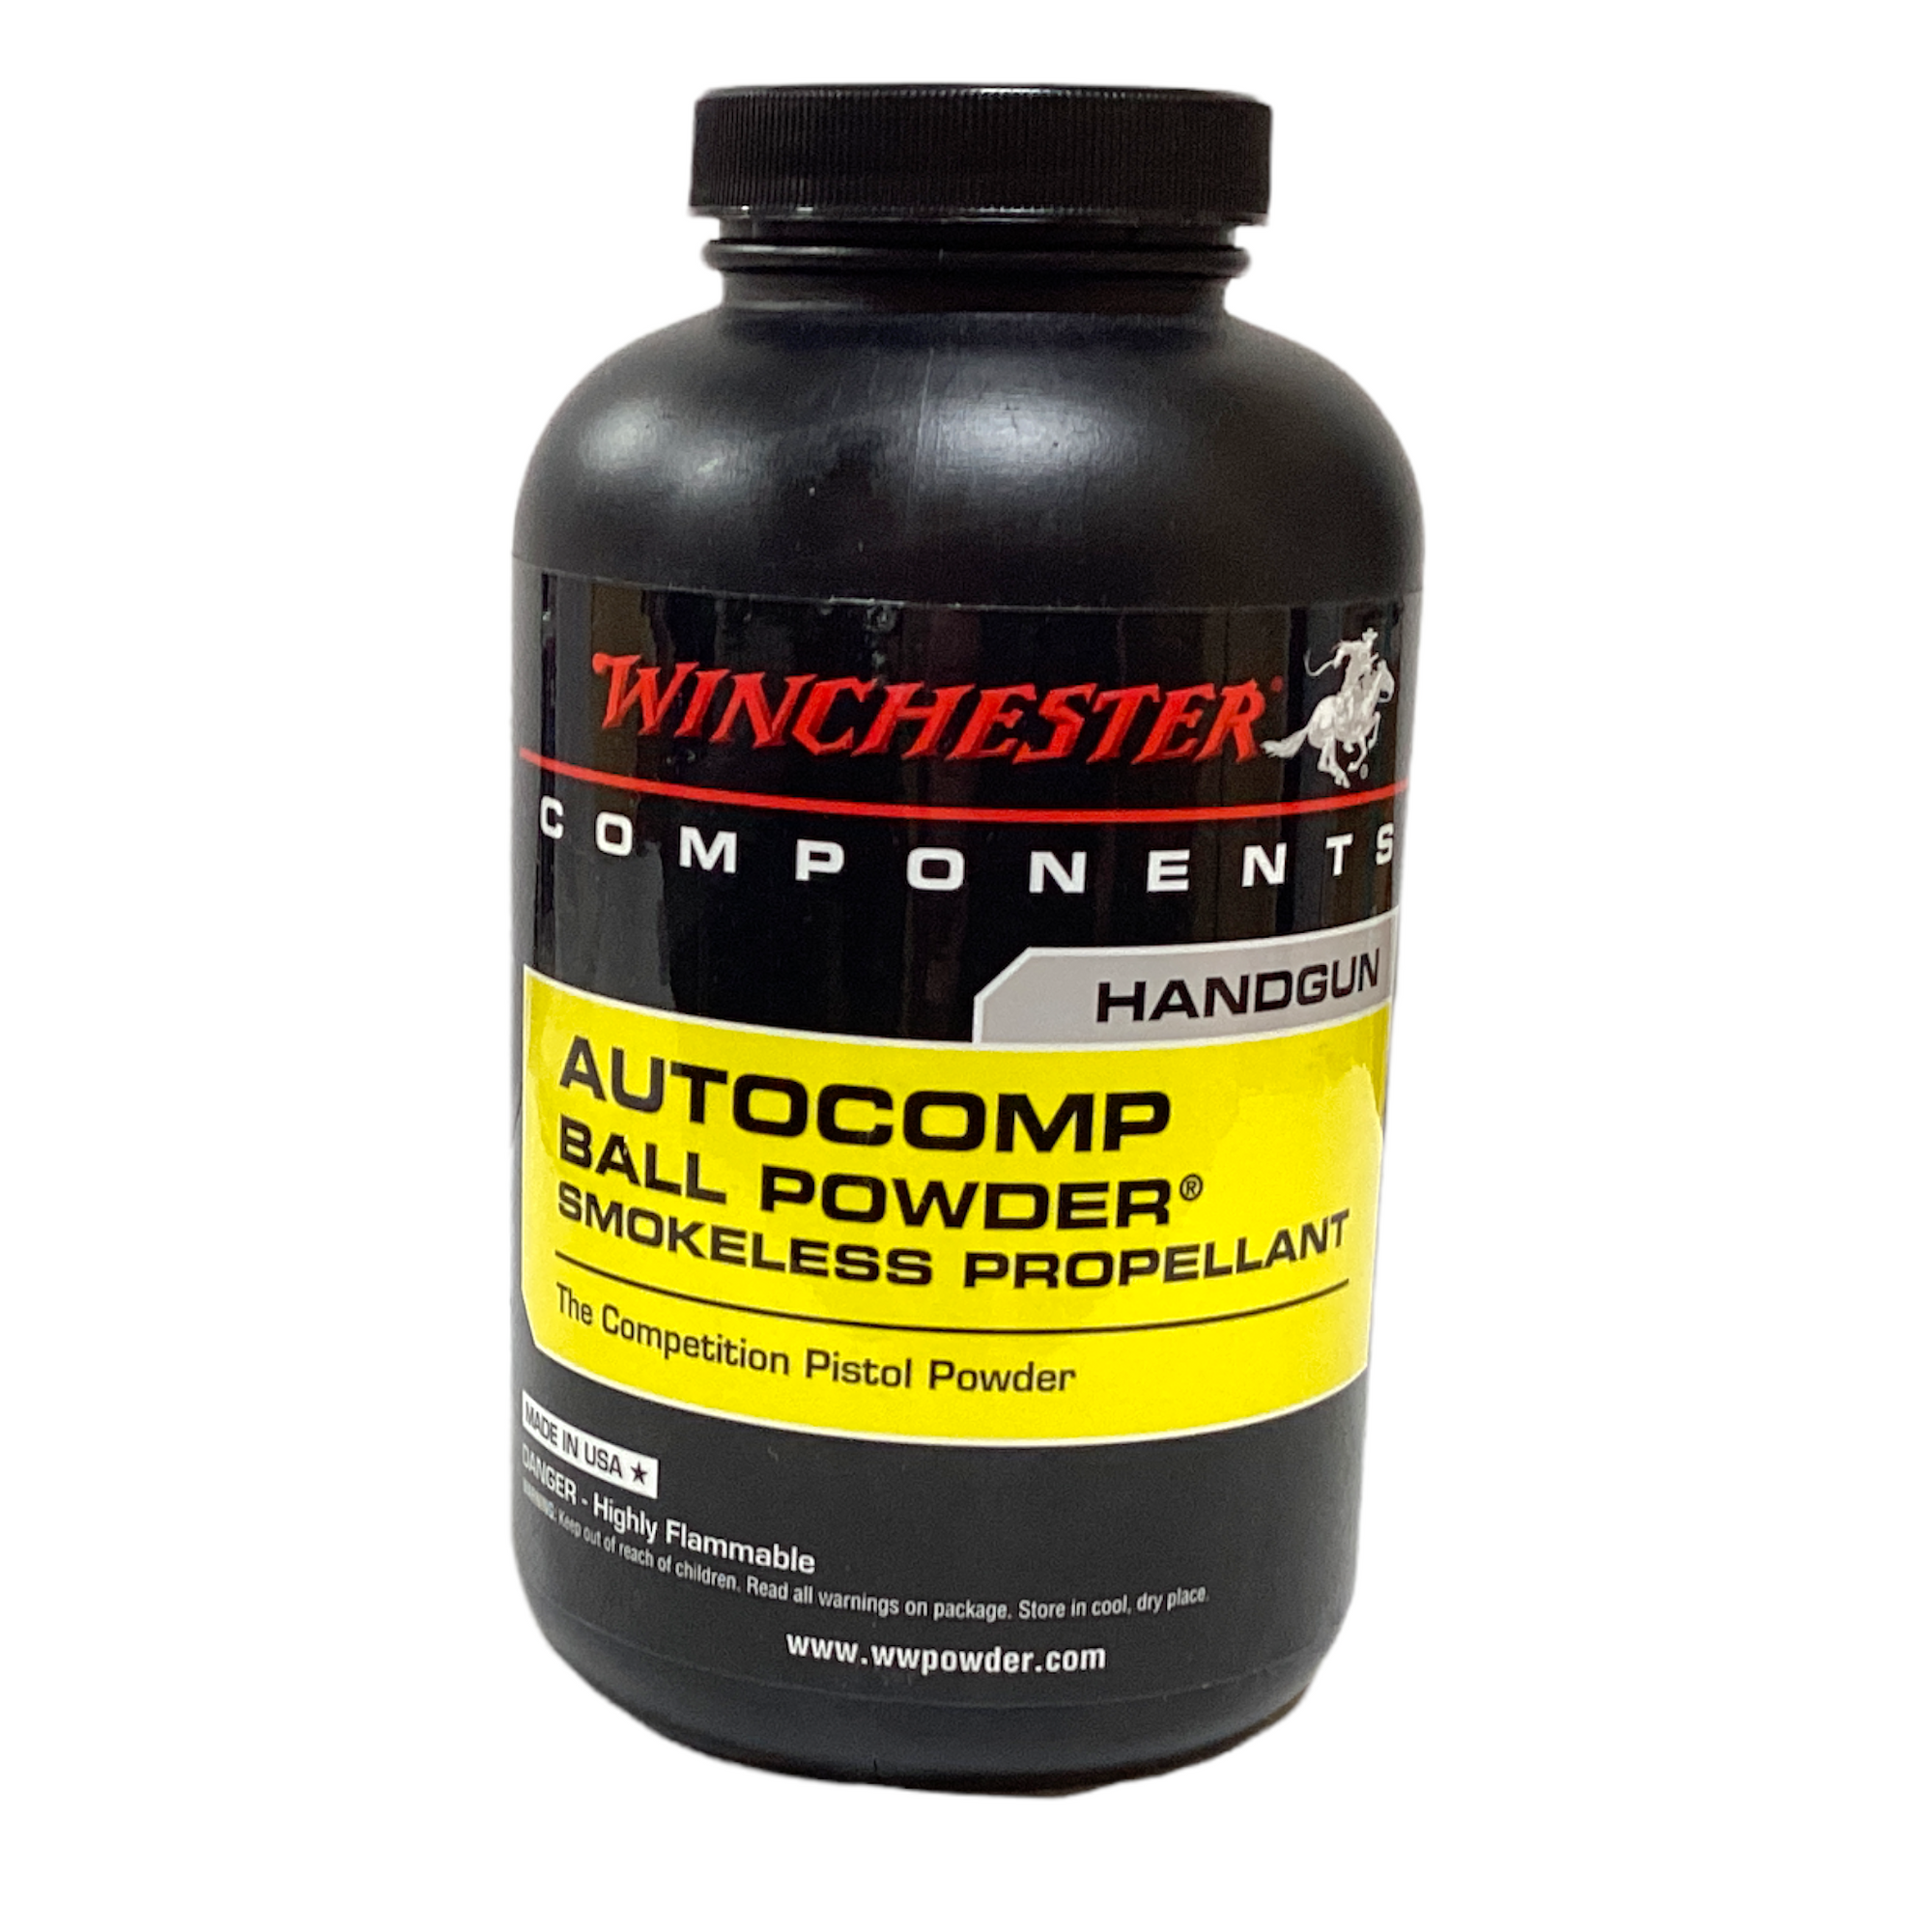 Winchester autocomp powder